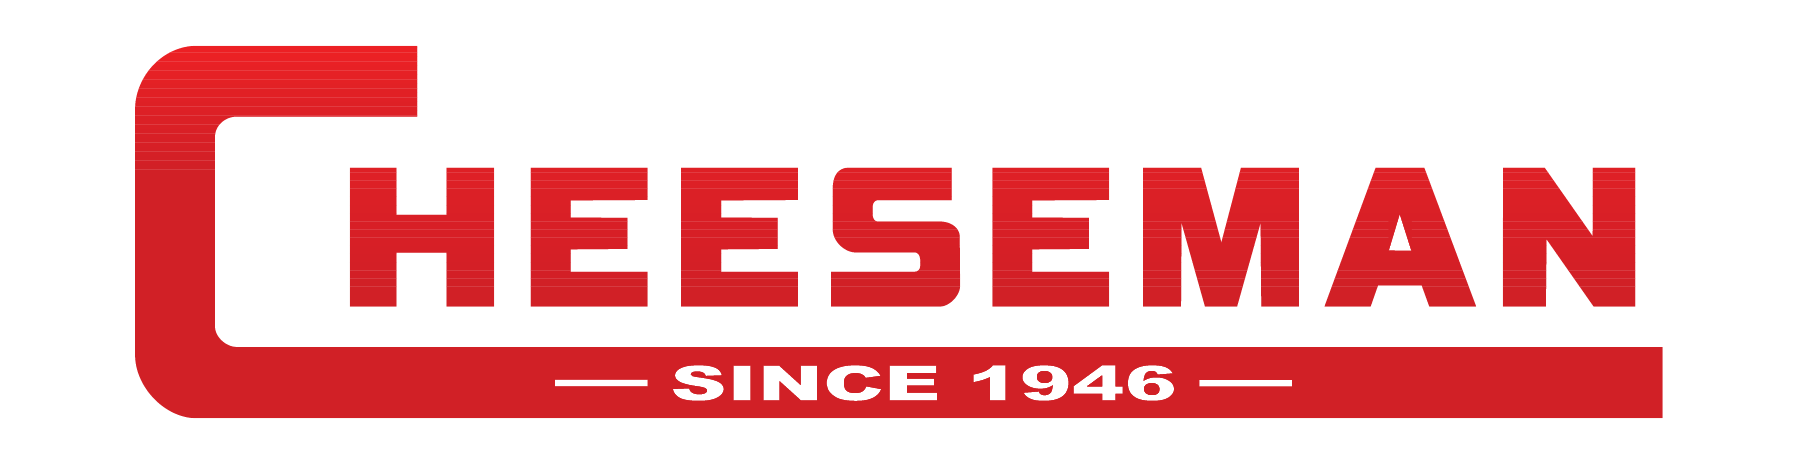 Cheeseman LLC logo